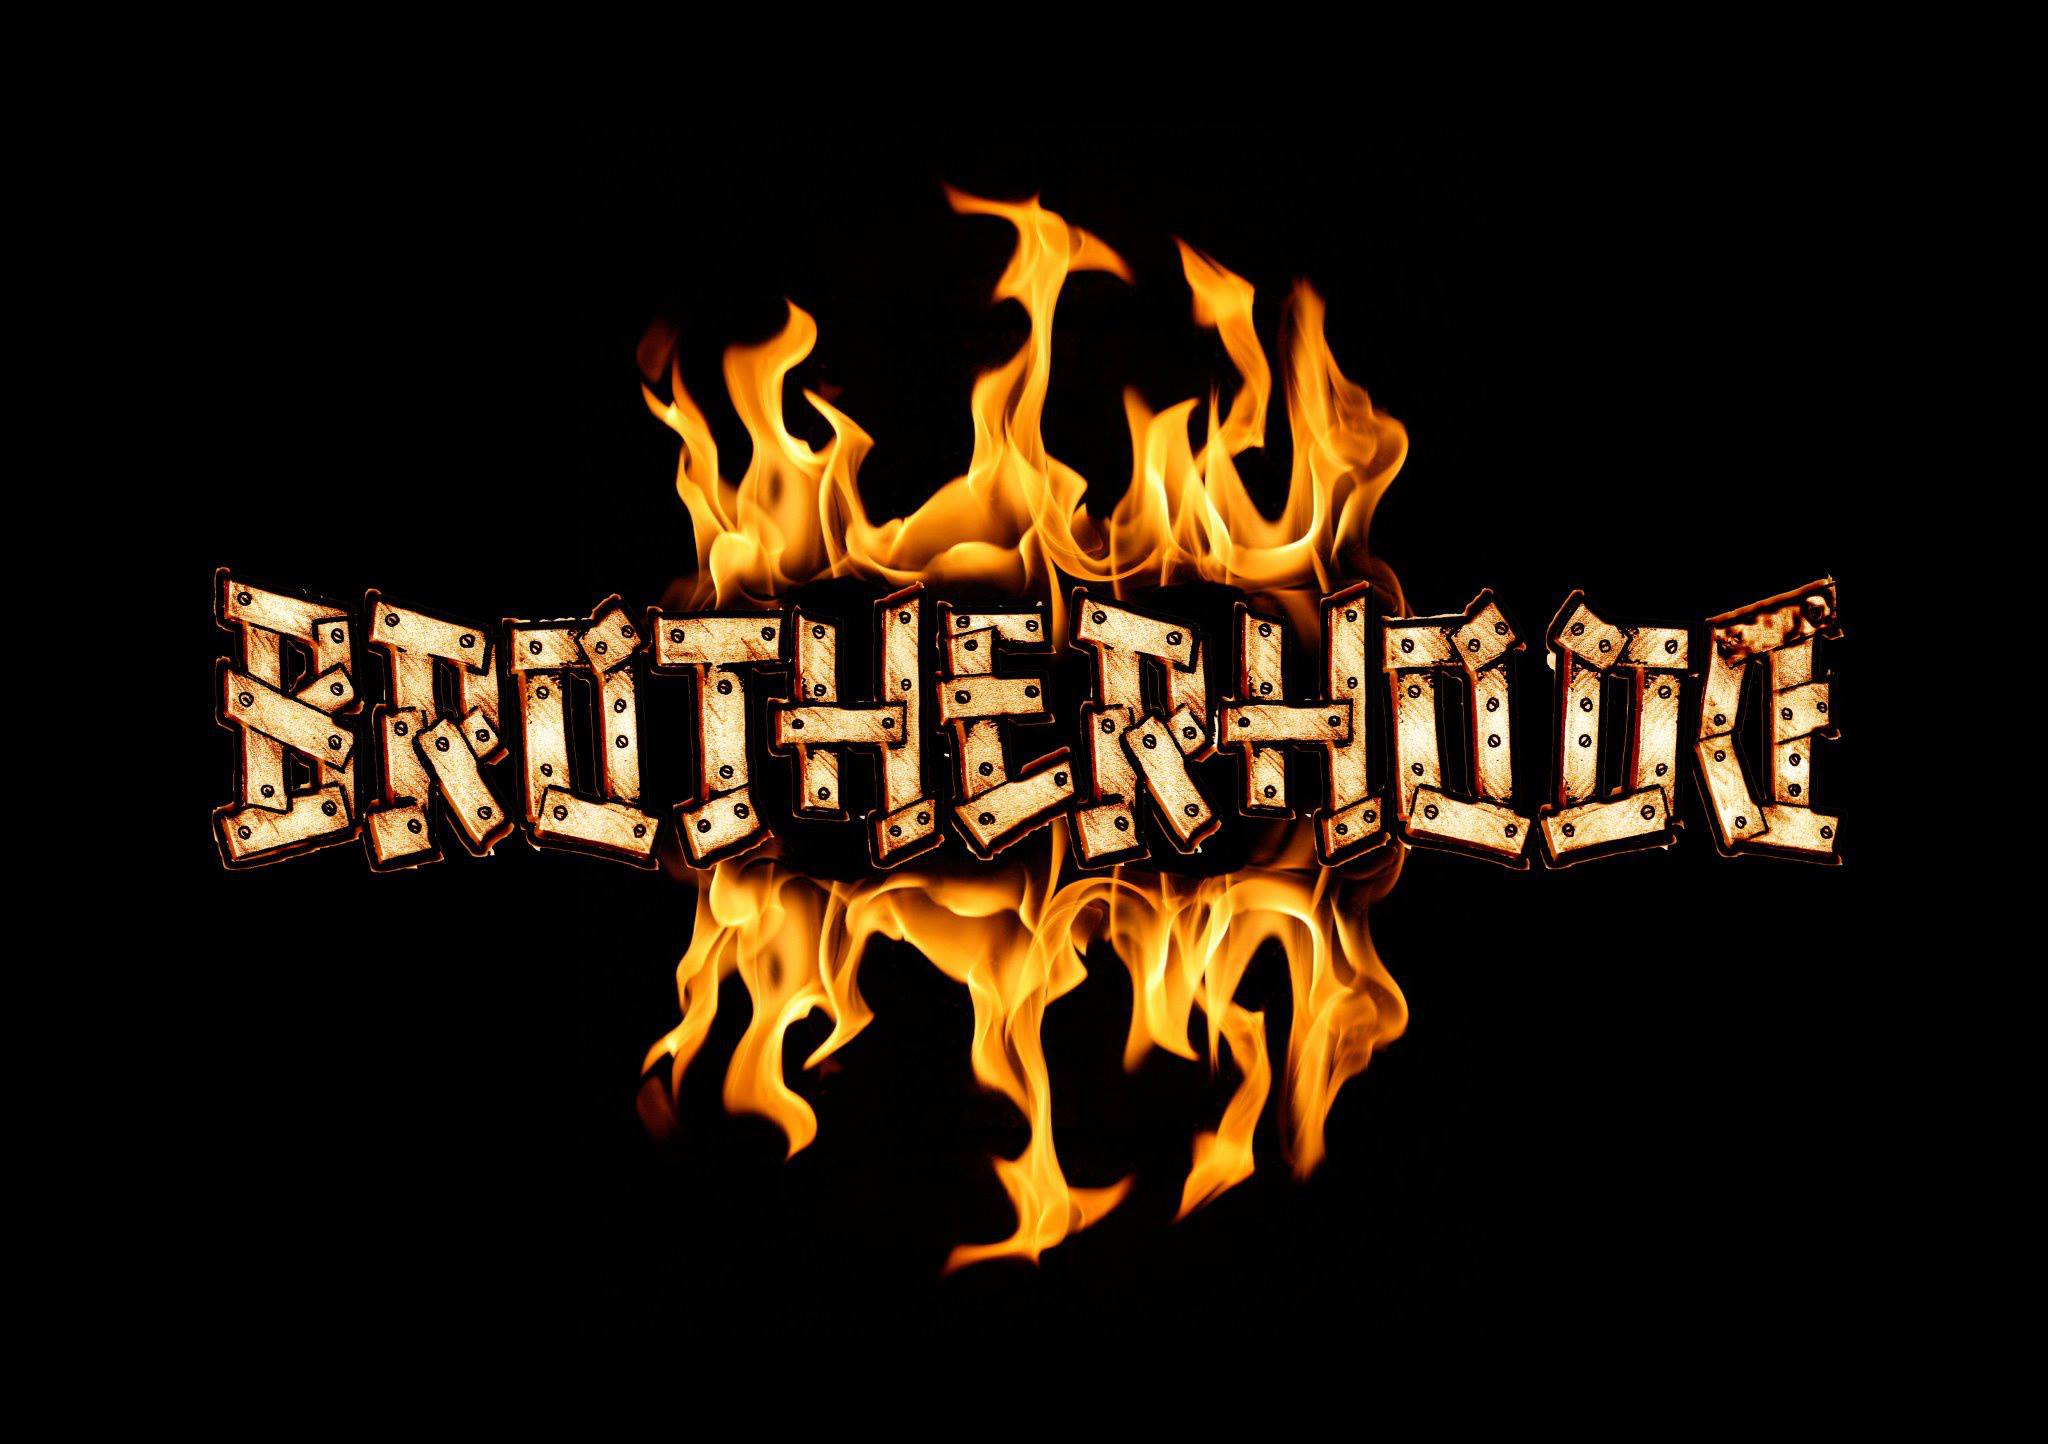 BrOTHERHOOD #9